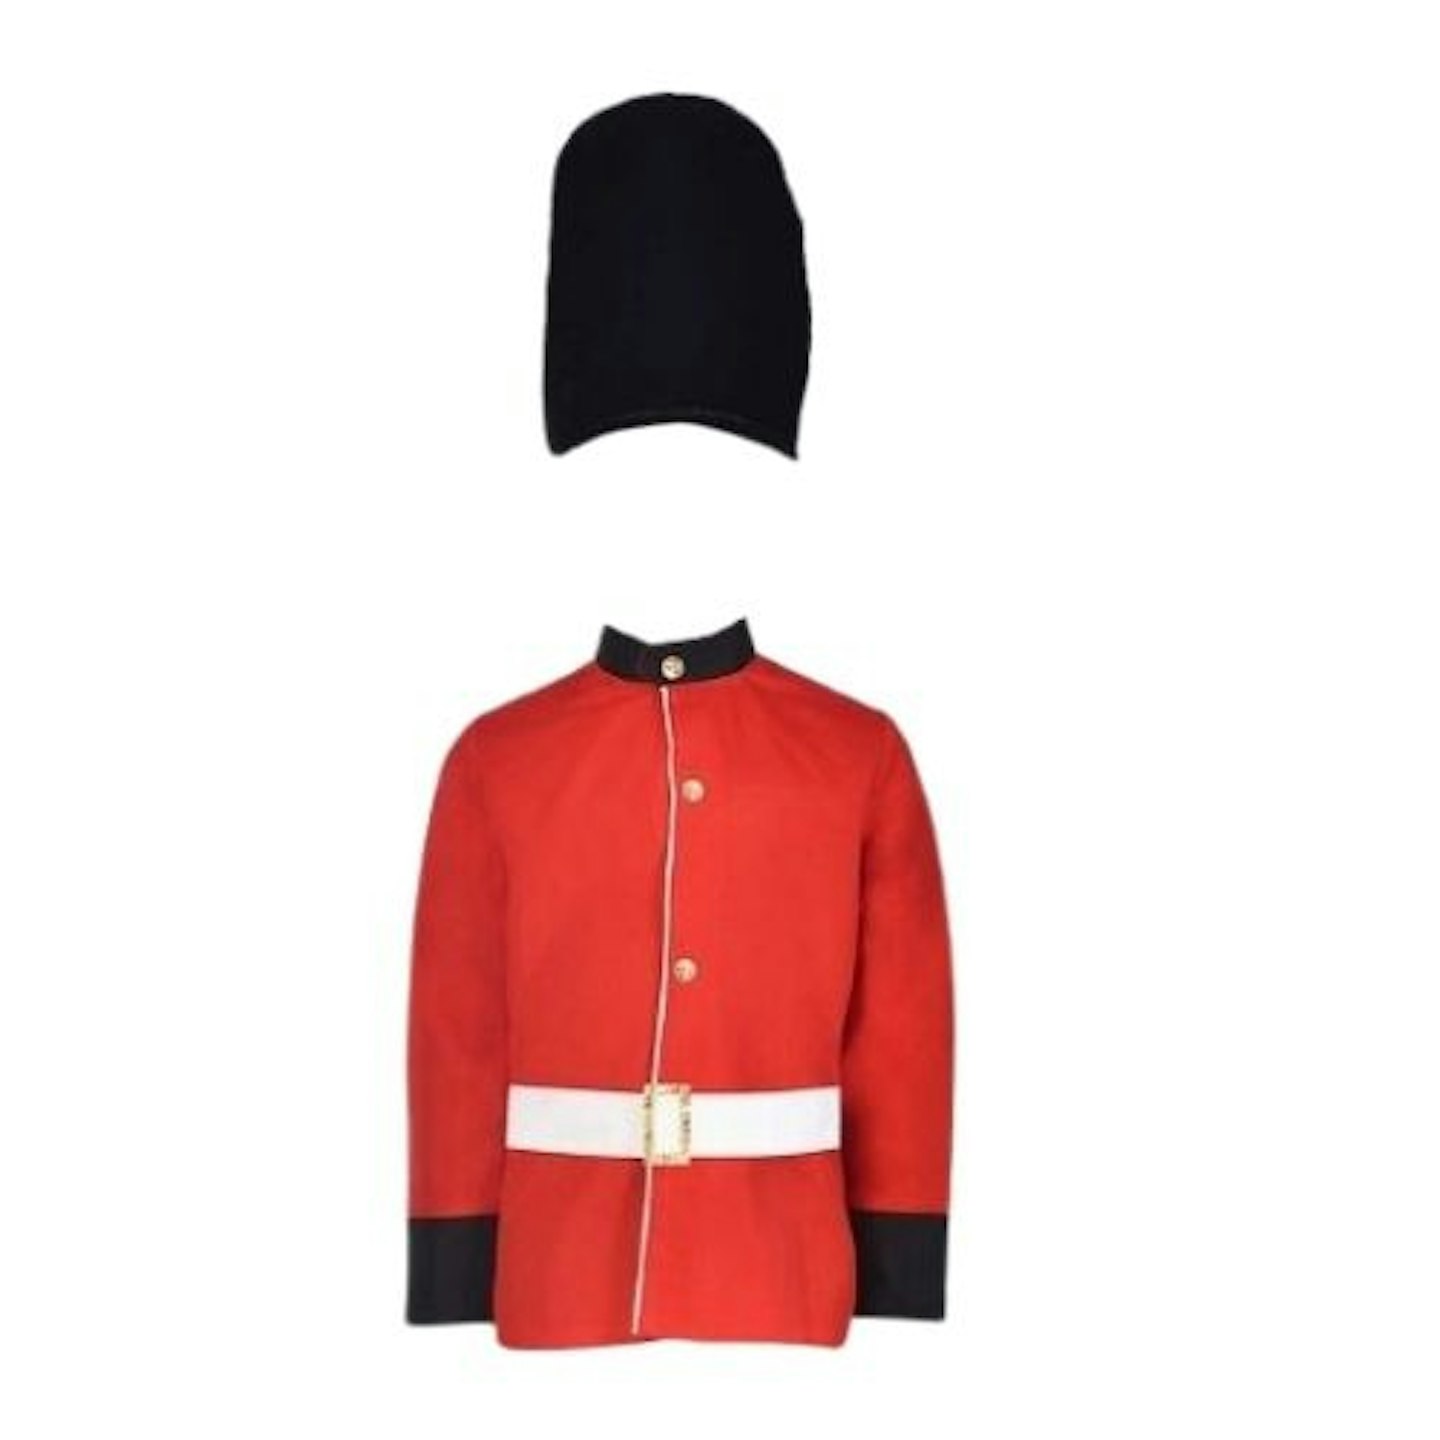 DRESS UP - Royal Guard button